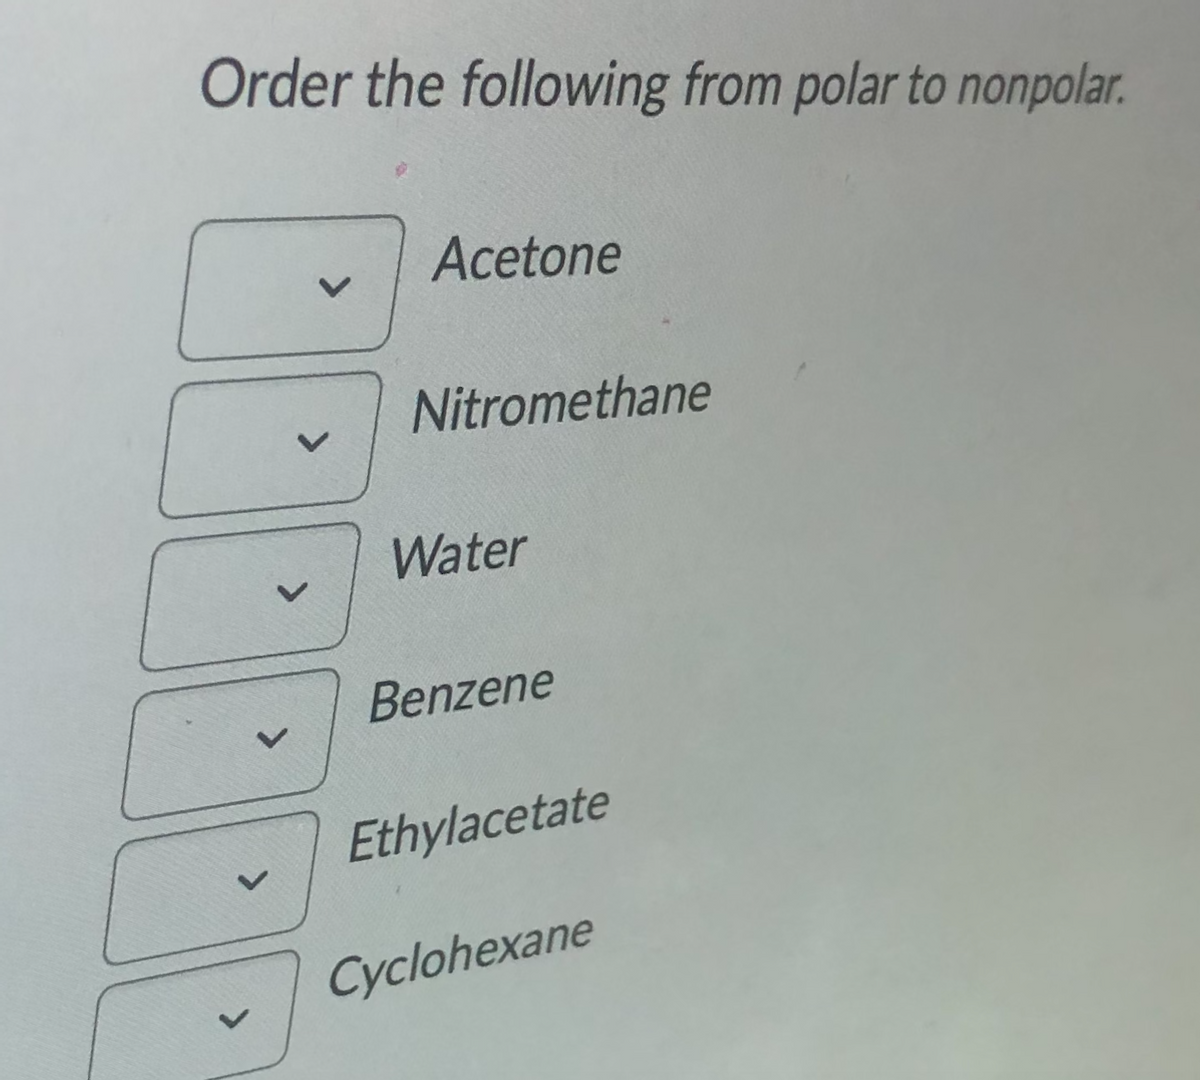 Order the following from polar to nonpolar.
Acetone
Nitromethane
Water
Benzene
レ
Ethylacetate
Cyclohexane
